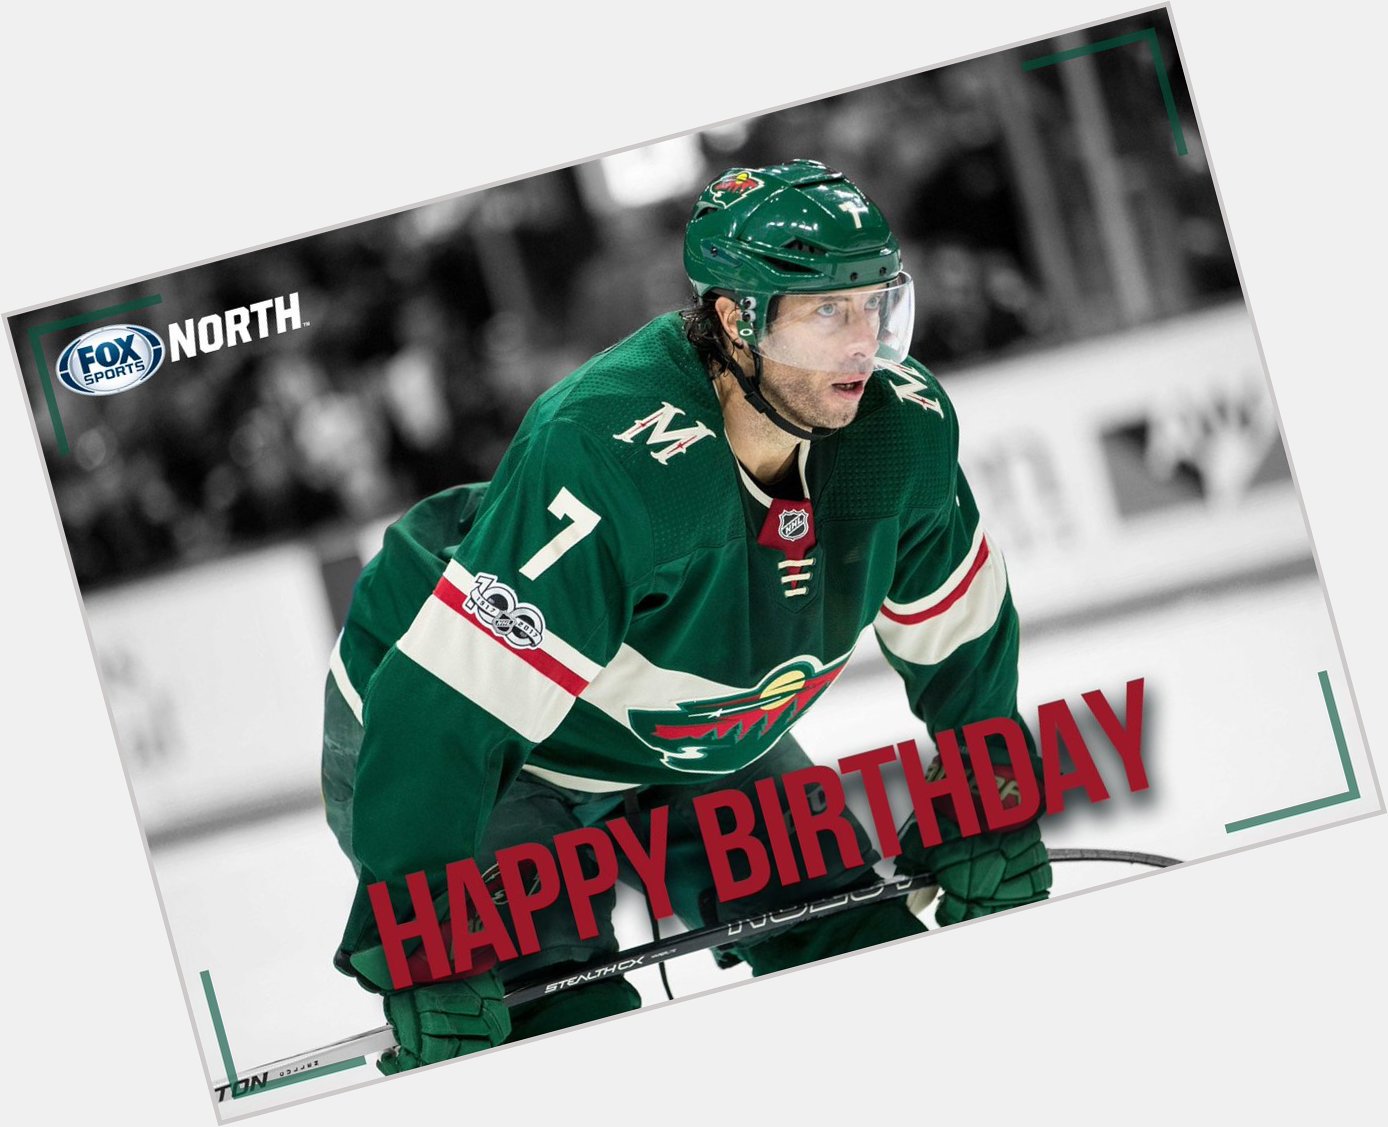 Happy Birthday to the State of Hockey s own, Matt Cullen! 